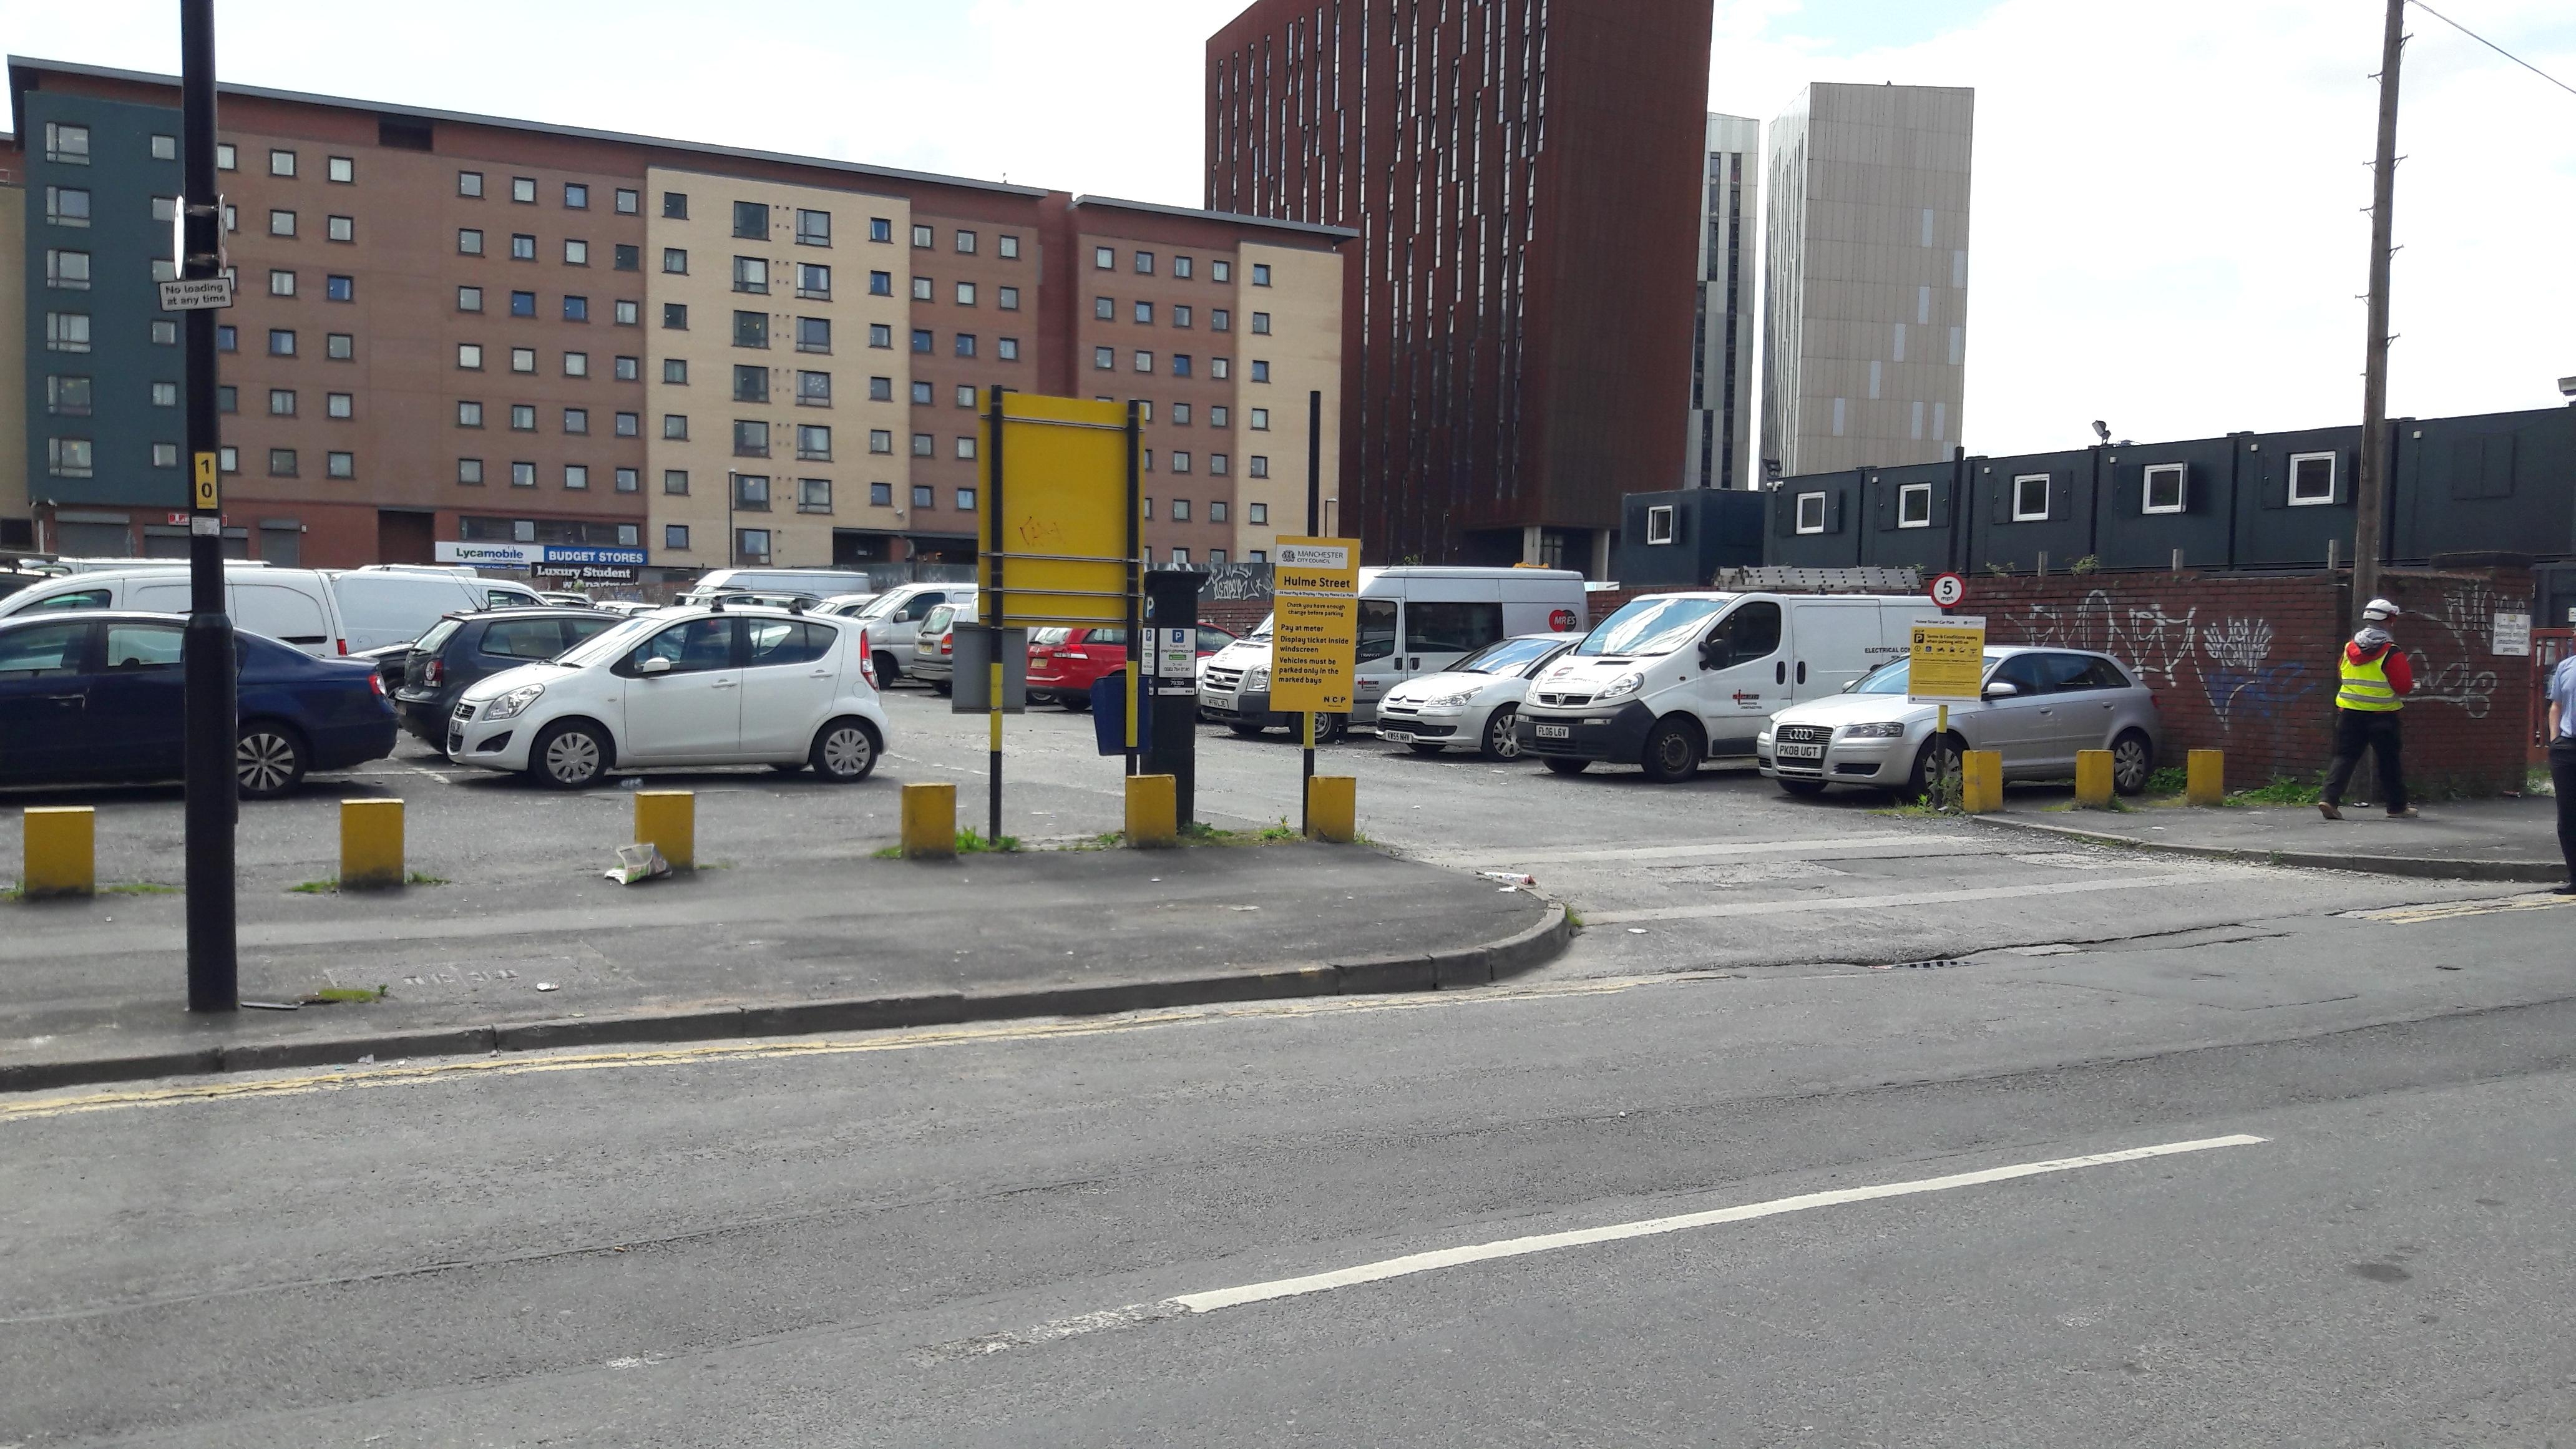 Hulme Street Car Park Parking In Manchester Parkme